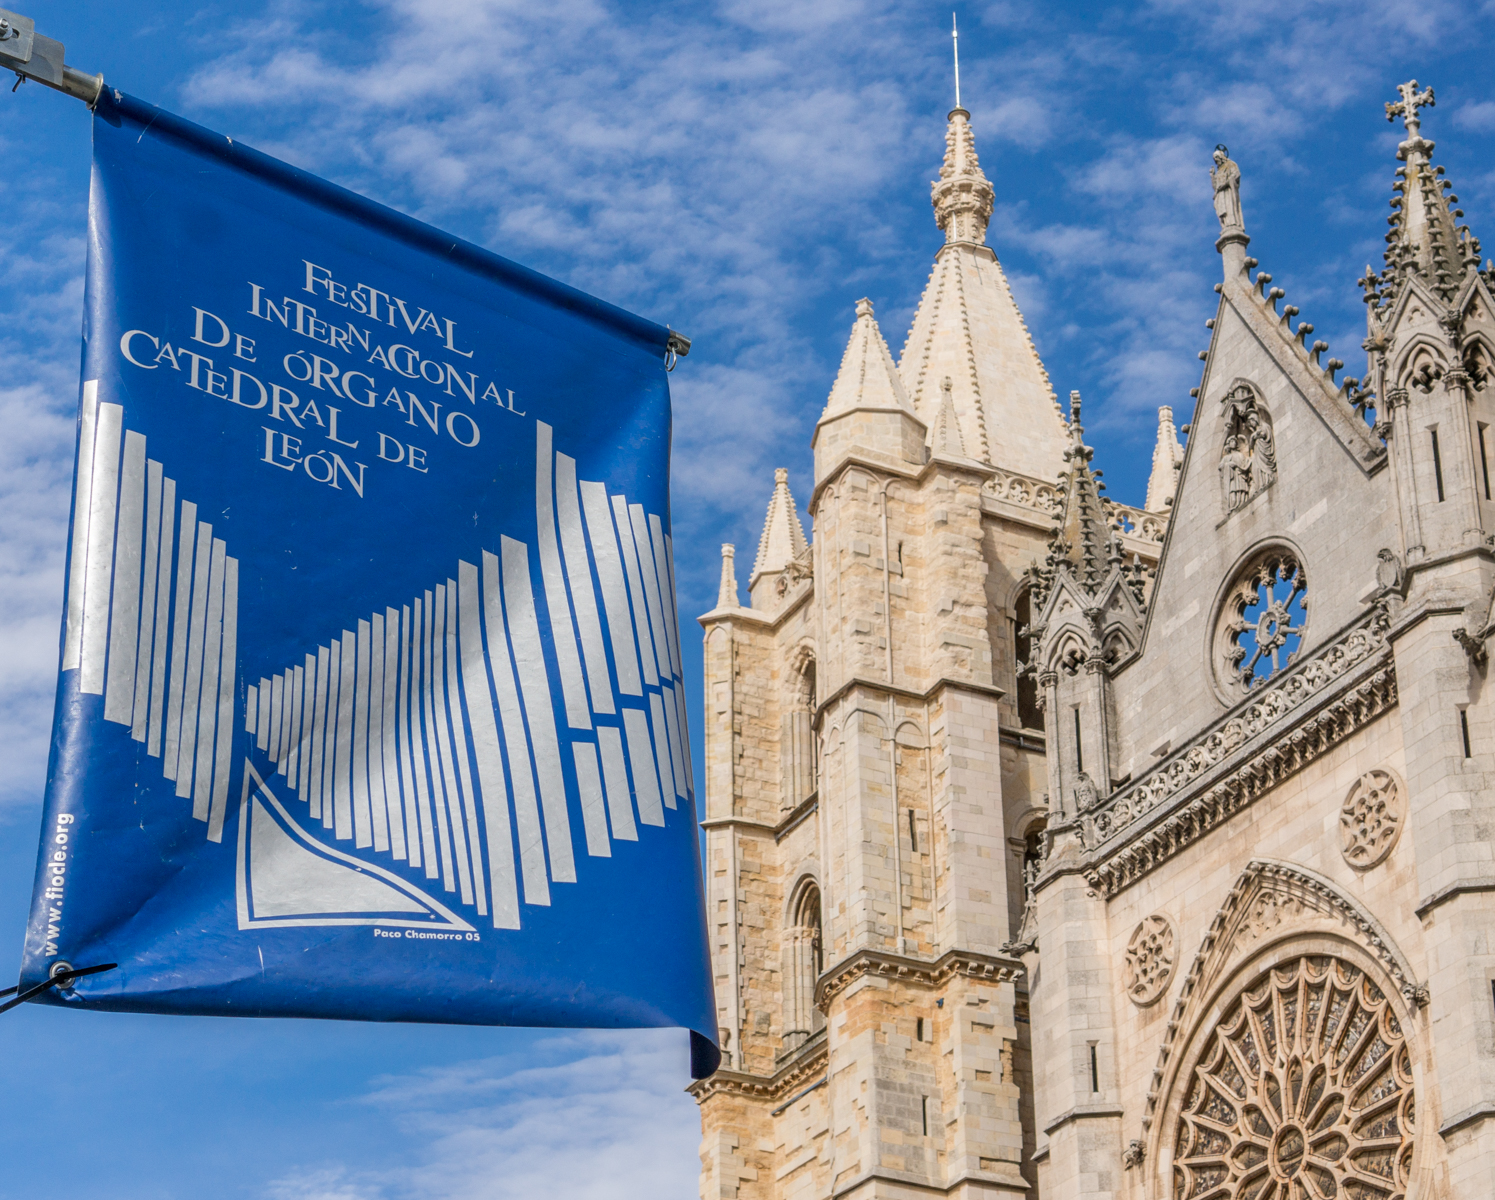 Sign announcing an international organ festival at the Catedral de Lon (Spain) | Photo by Mike Hudak